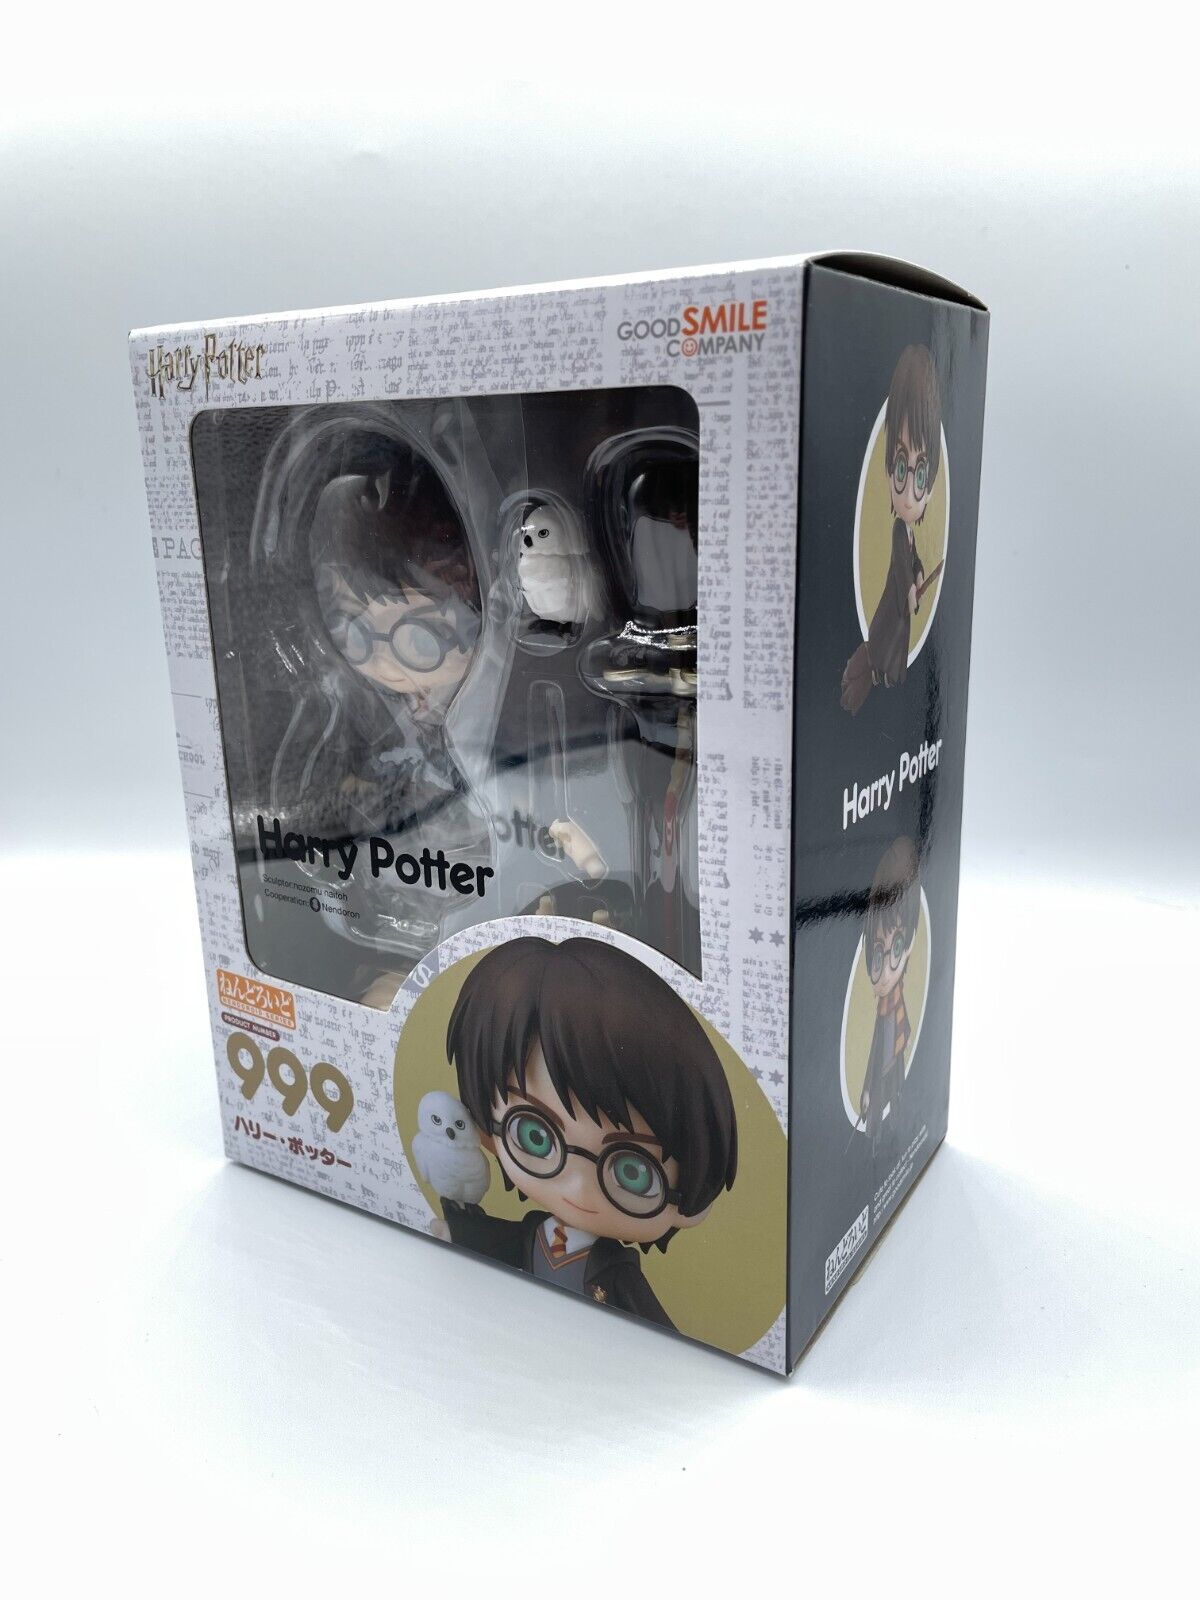 Nendoroid Harry Potter Action Figure 999 Good Smile Co. Brand New Sealed NIB